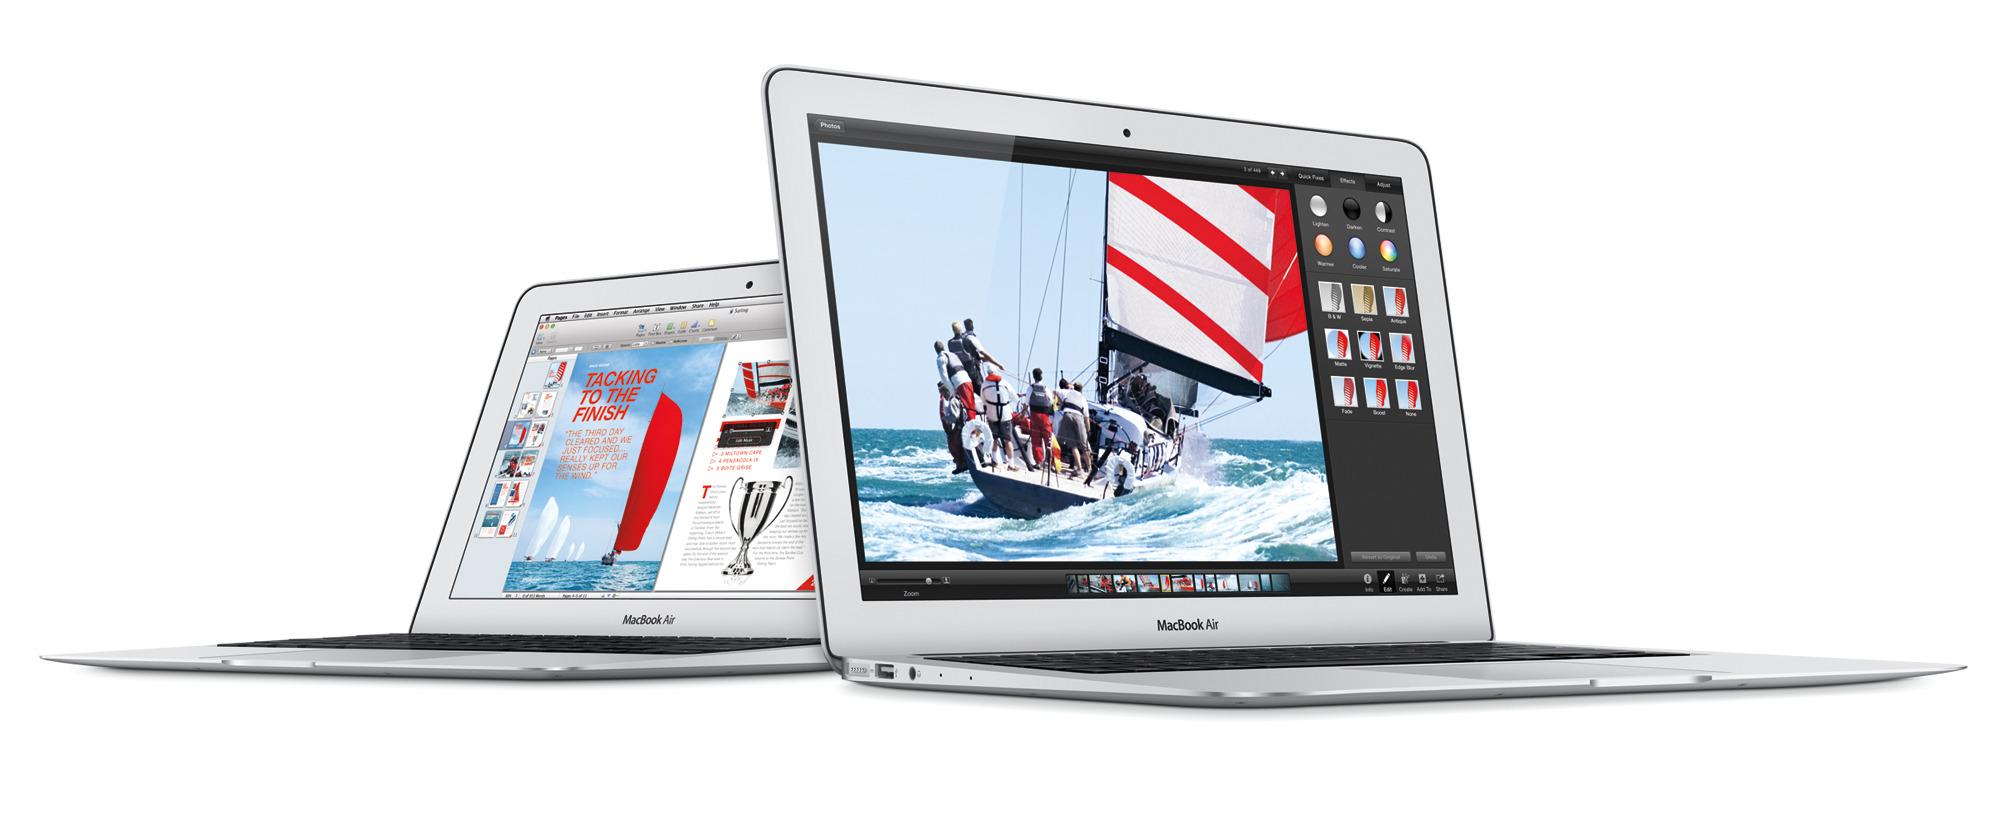 MacBook Air kommer trolig i Retina-utgave.Foto: Apple